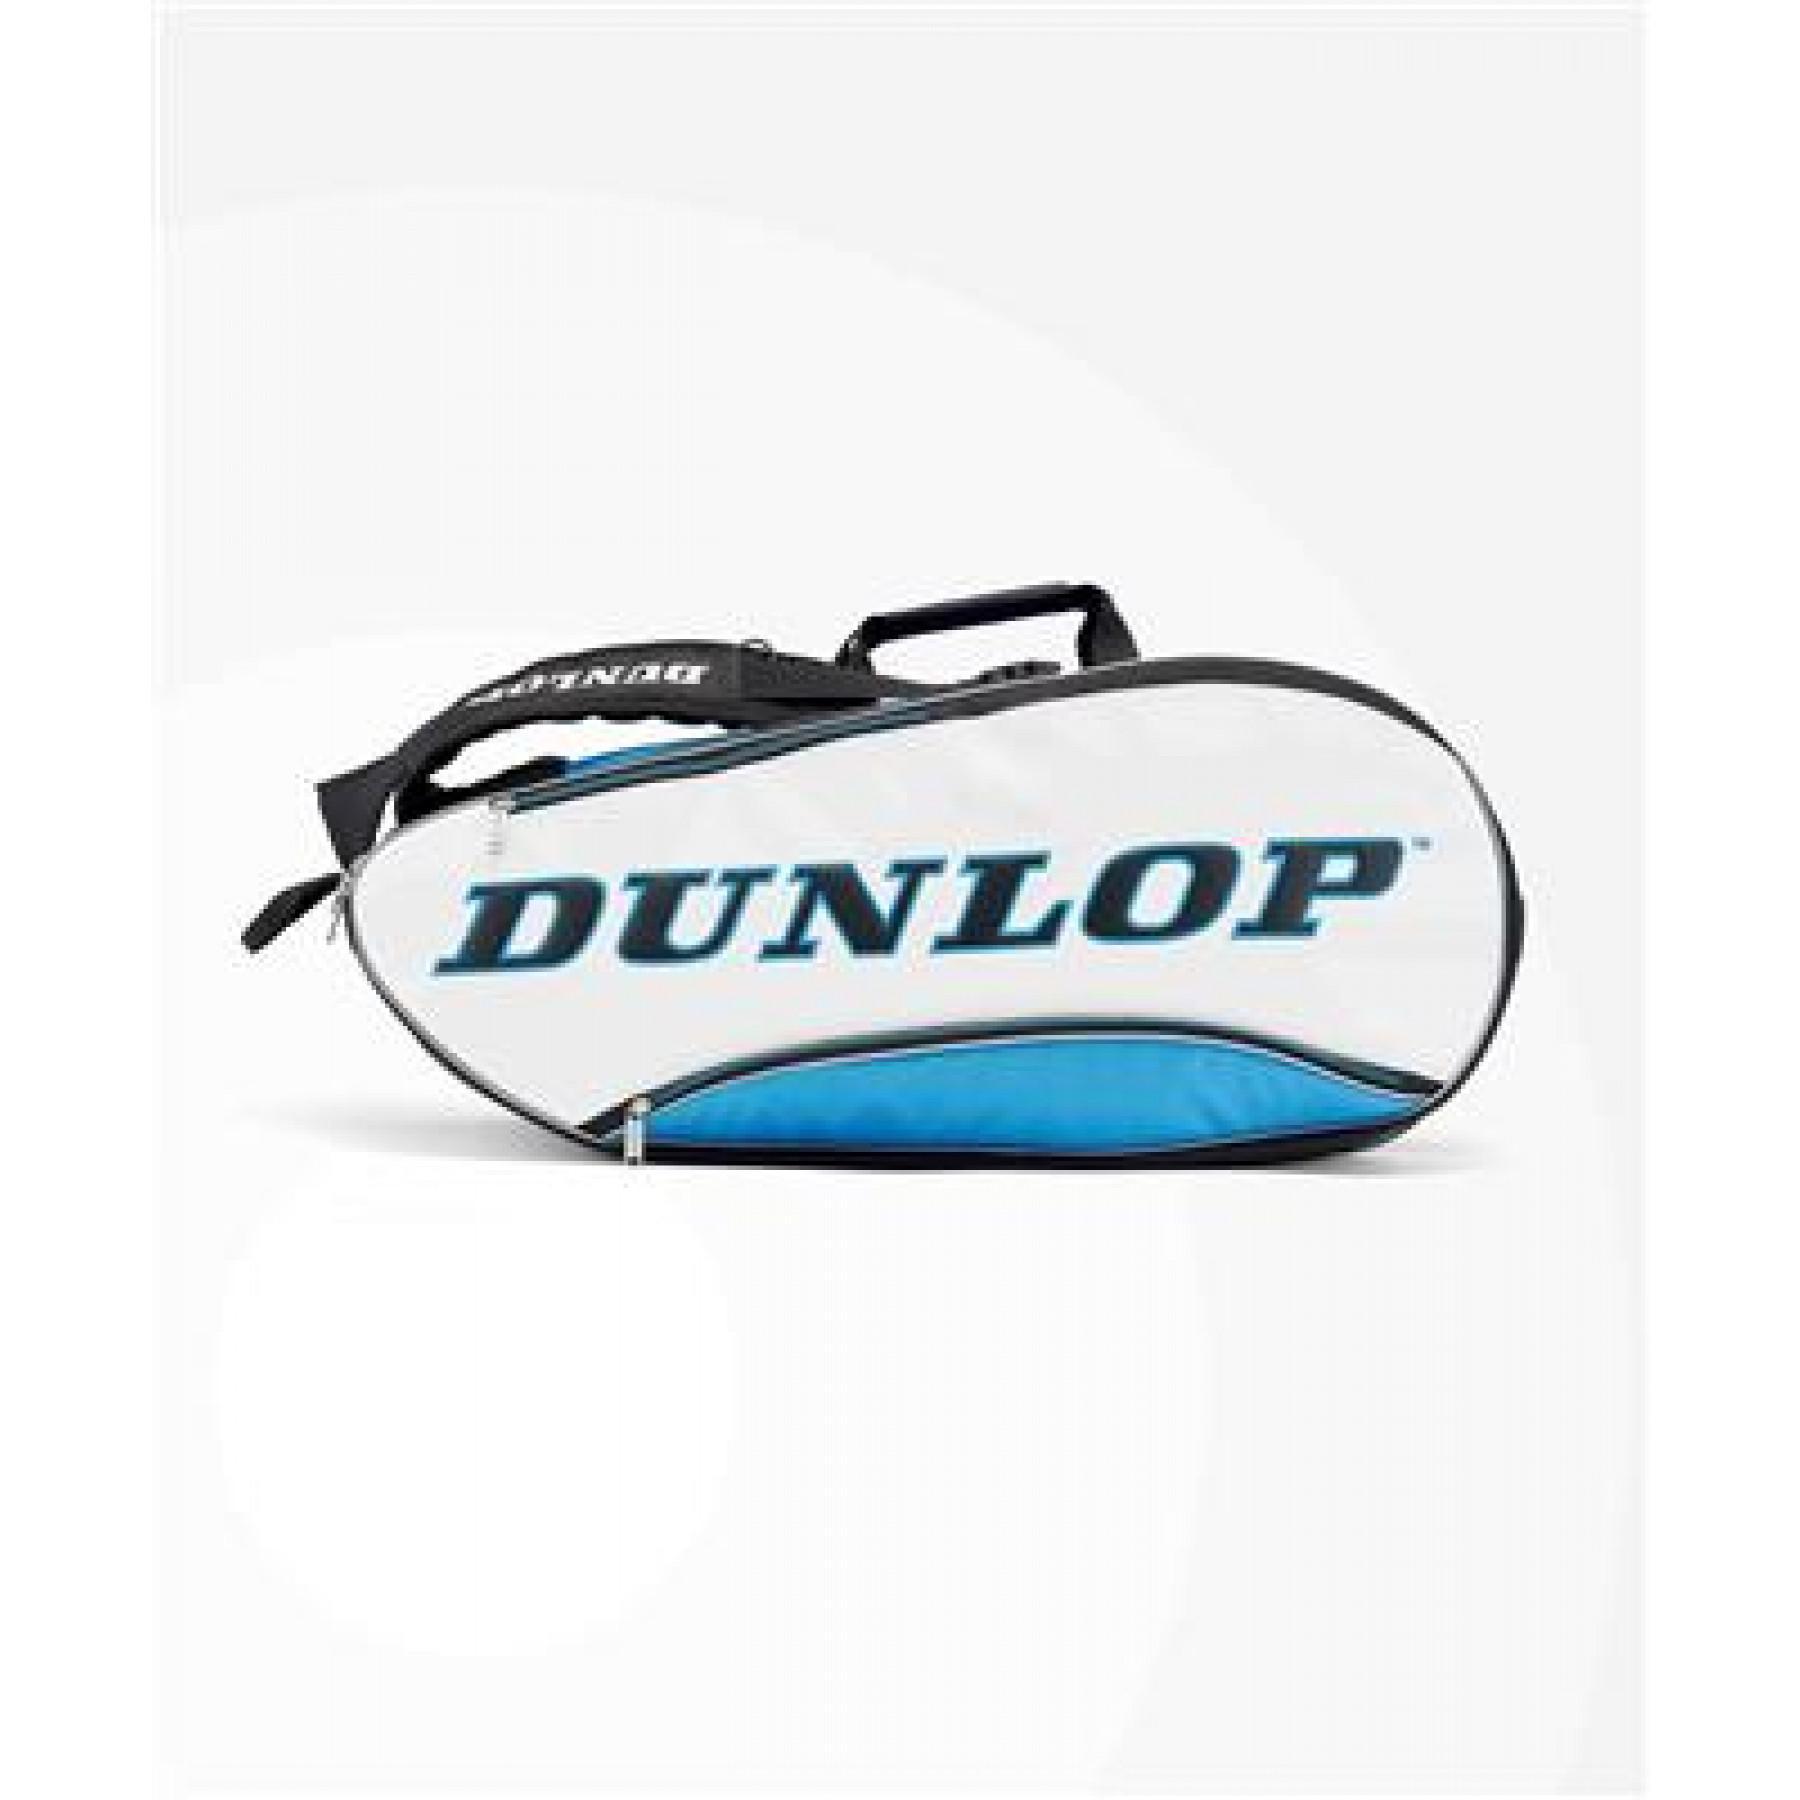 Tennis bag Dunlop srixon 12